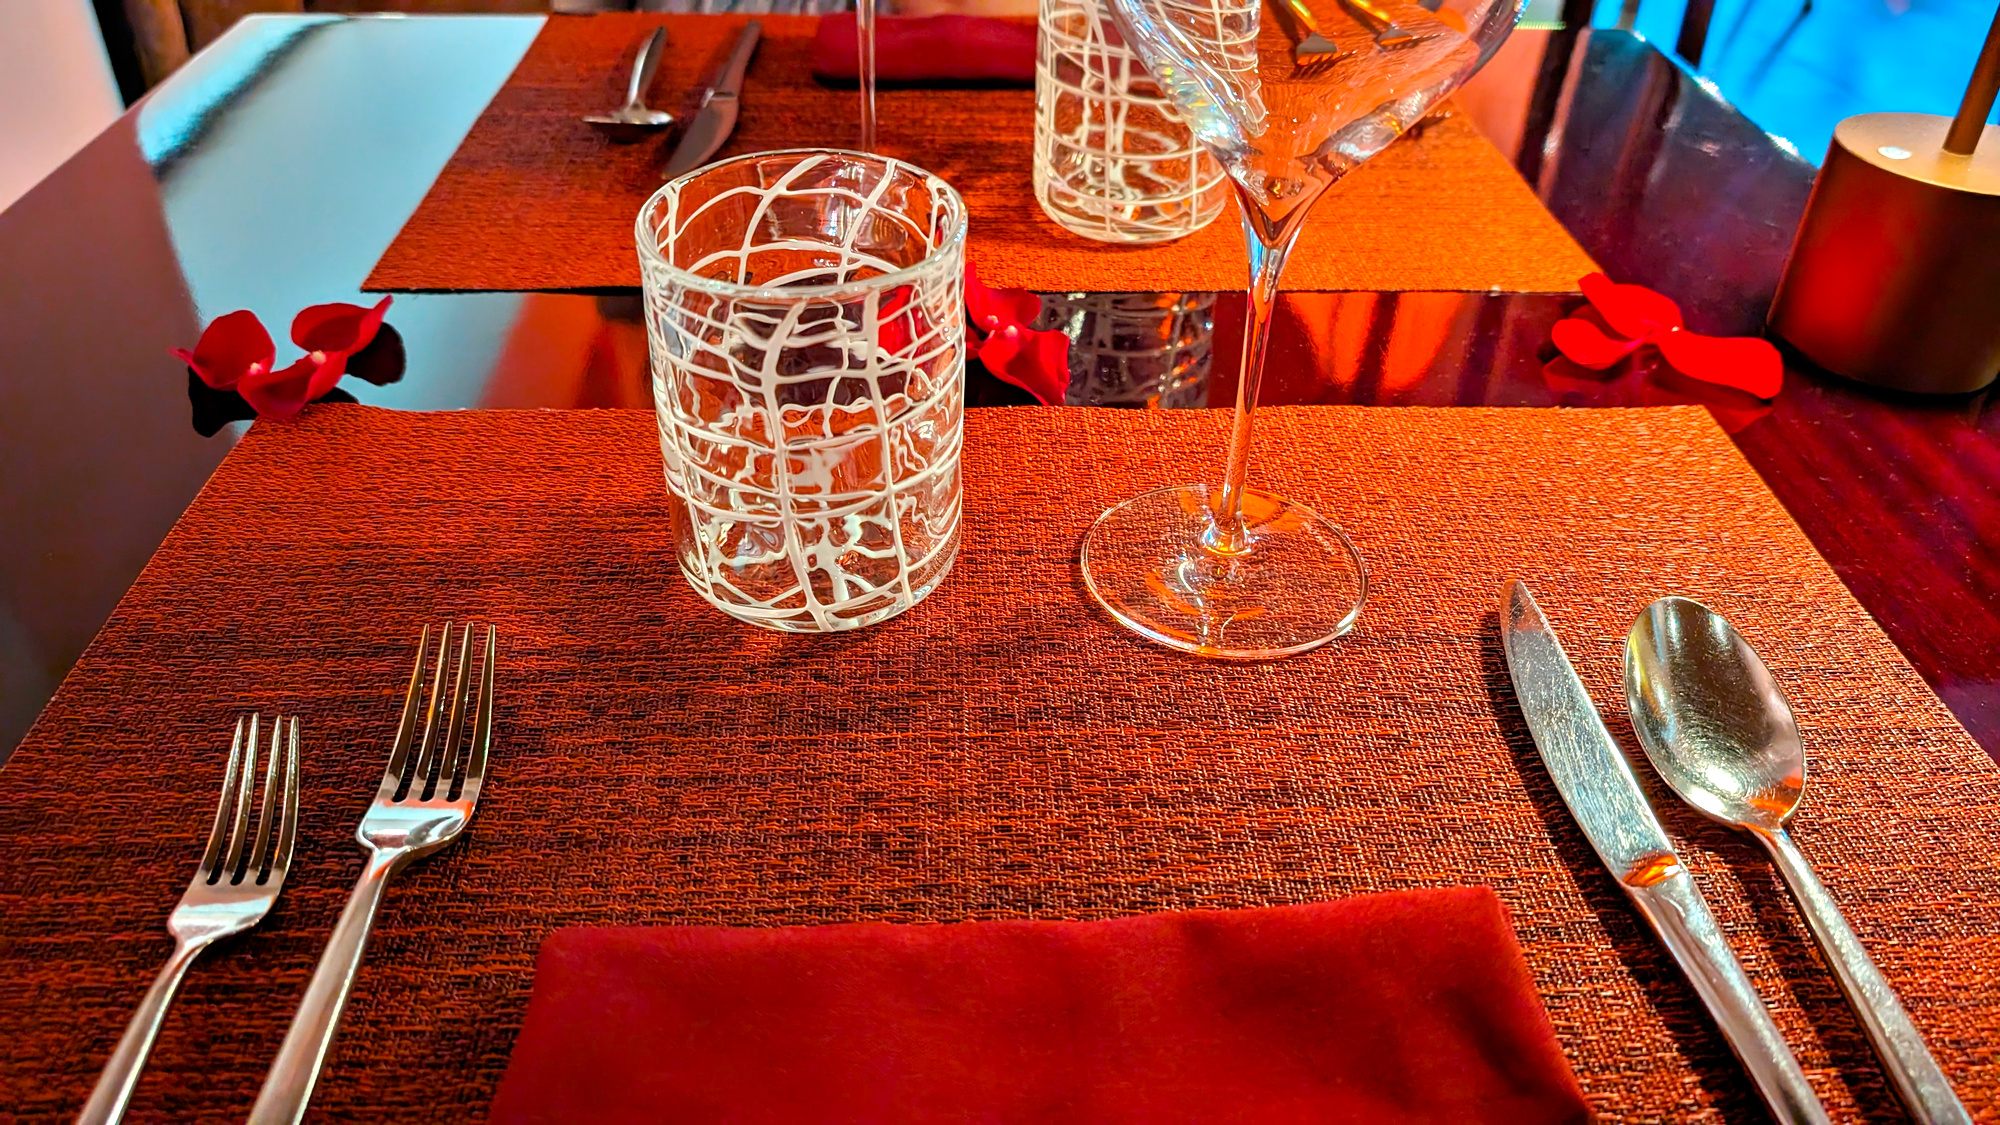 The table setting at Marmalade